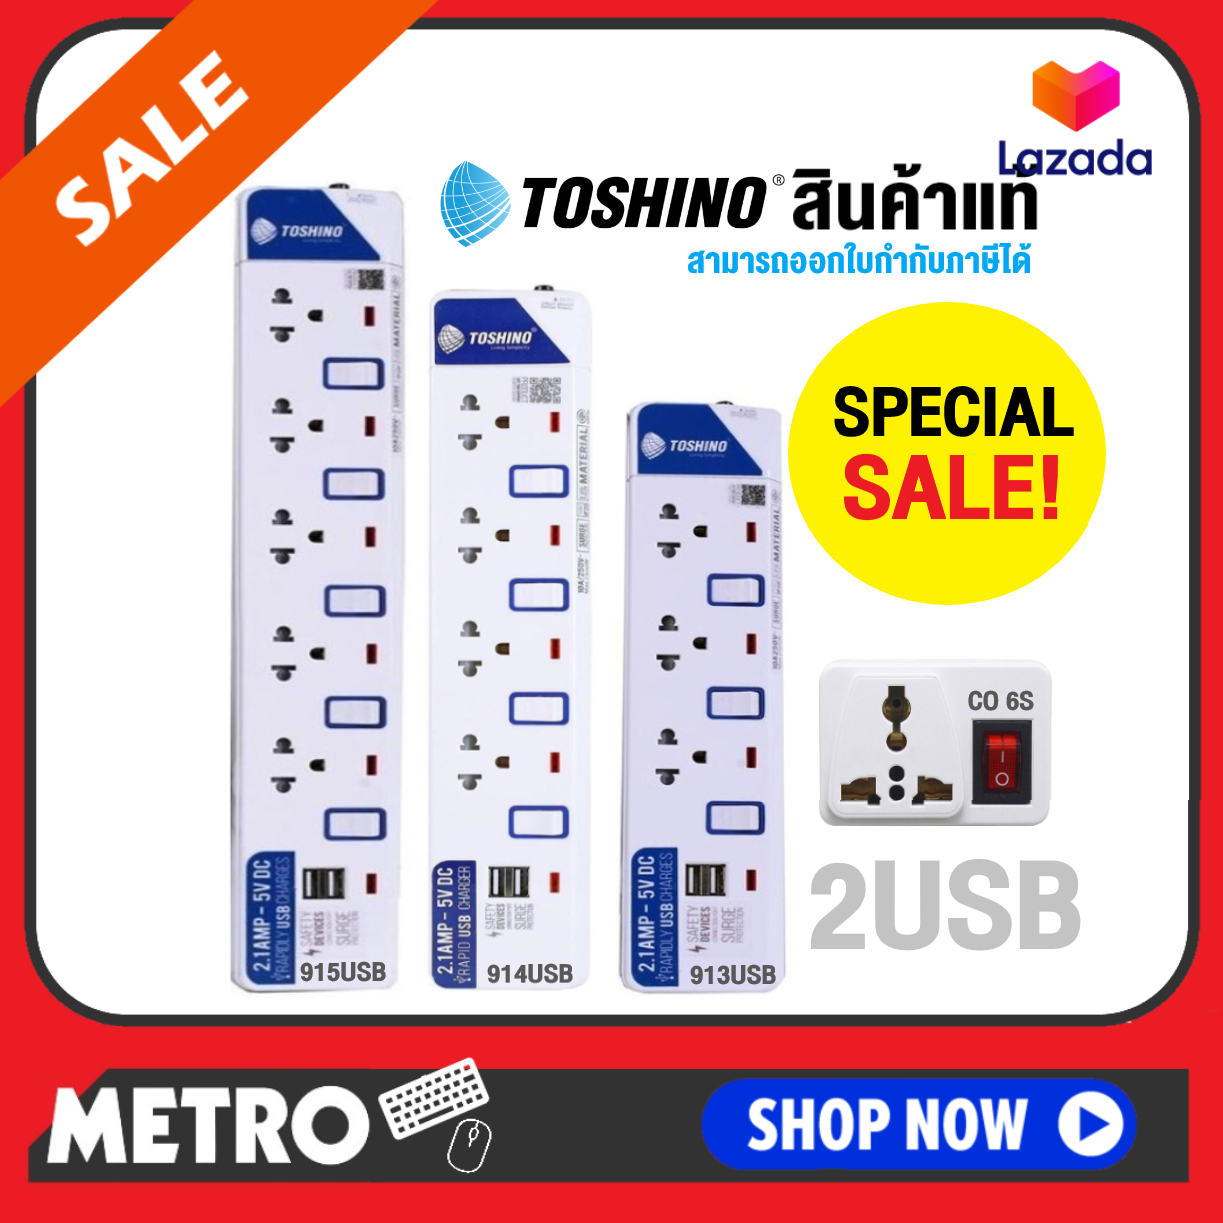 TOSHINO รางปลั๊กไฟ มี USB ชาร์จ 2 ช่อง สายยาว 3เมตร พร้อมไฟบอกสถานะ LED เลือกจำนวนปลั๊กไฟ 3 ถึง 5 ช่อง 5 สวิตซ์ by METRO